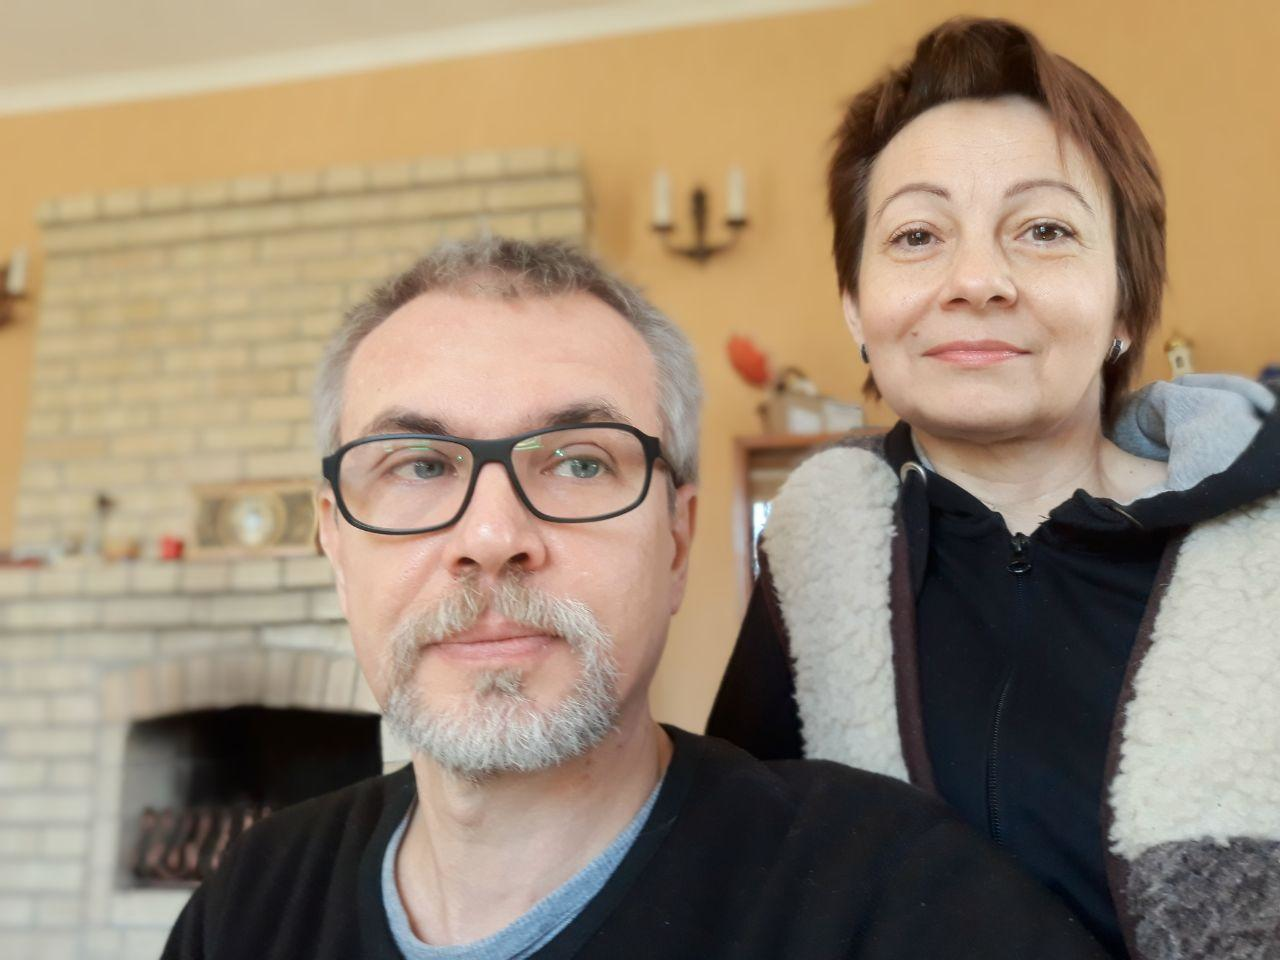 Елена Лазарева и Андрей Кочмурадов, апрель 2020 года. Фото Spektr. Press